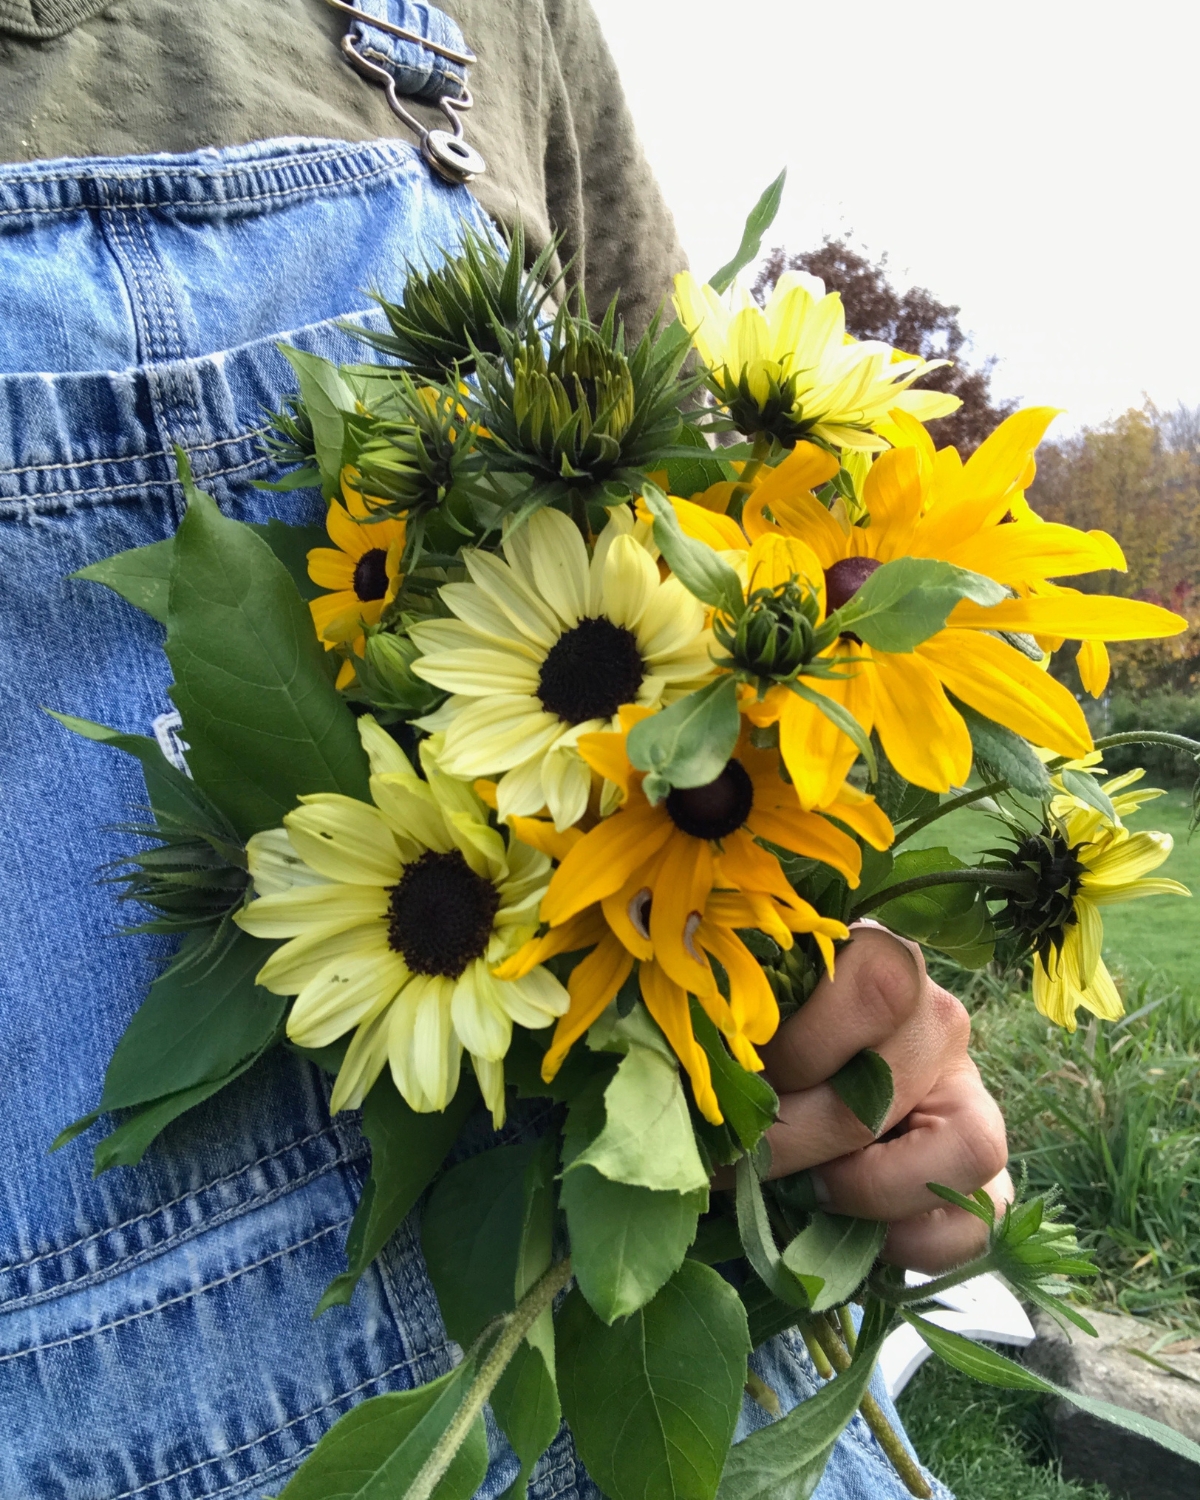 Big handful of sunflowers being held in front of blue denim overalls